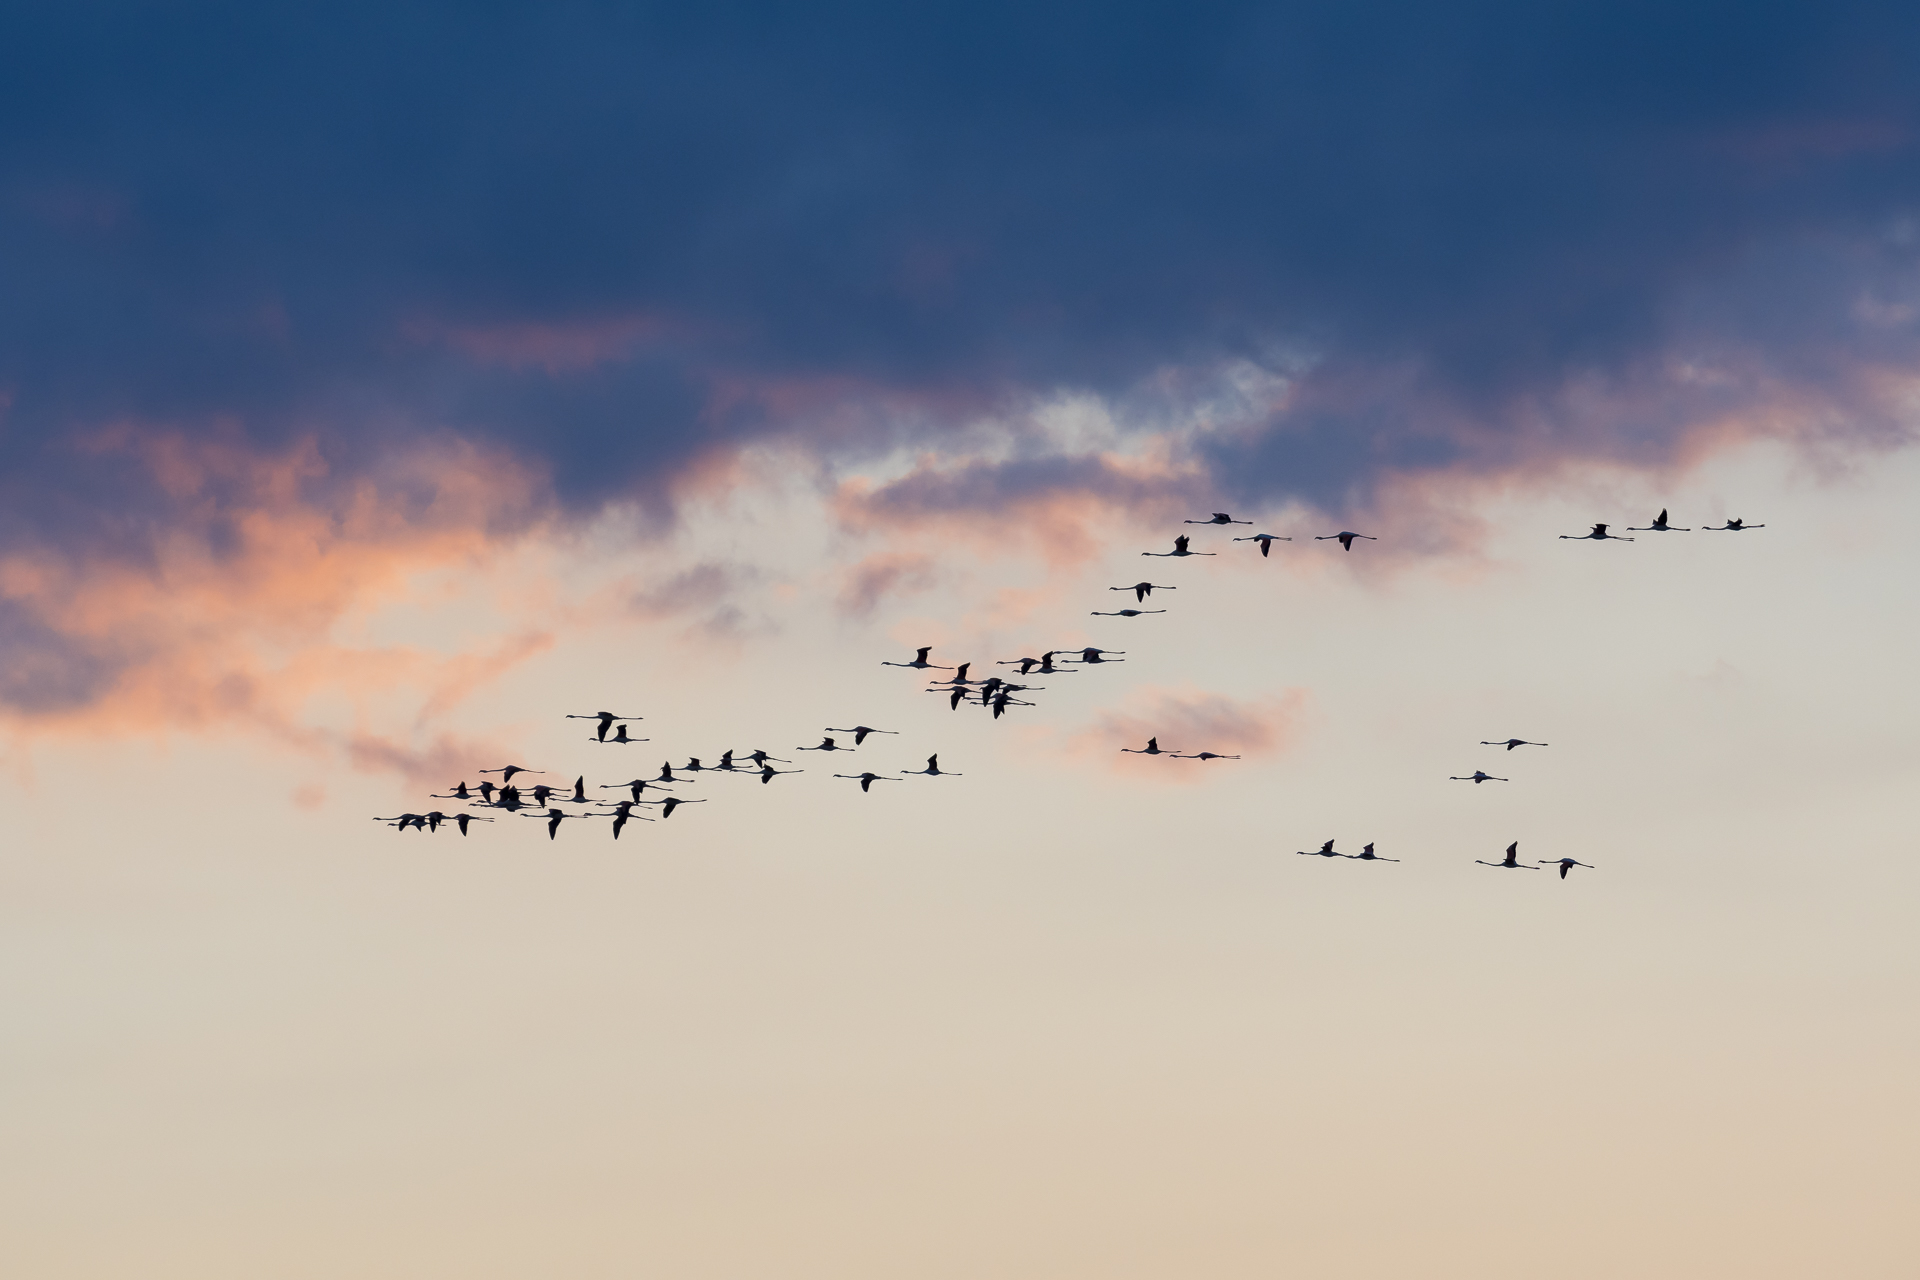 Flamingos flying back to their roost at sunset. Parc naturel régional de Camargue, France.